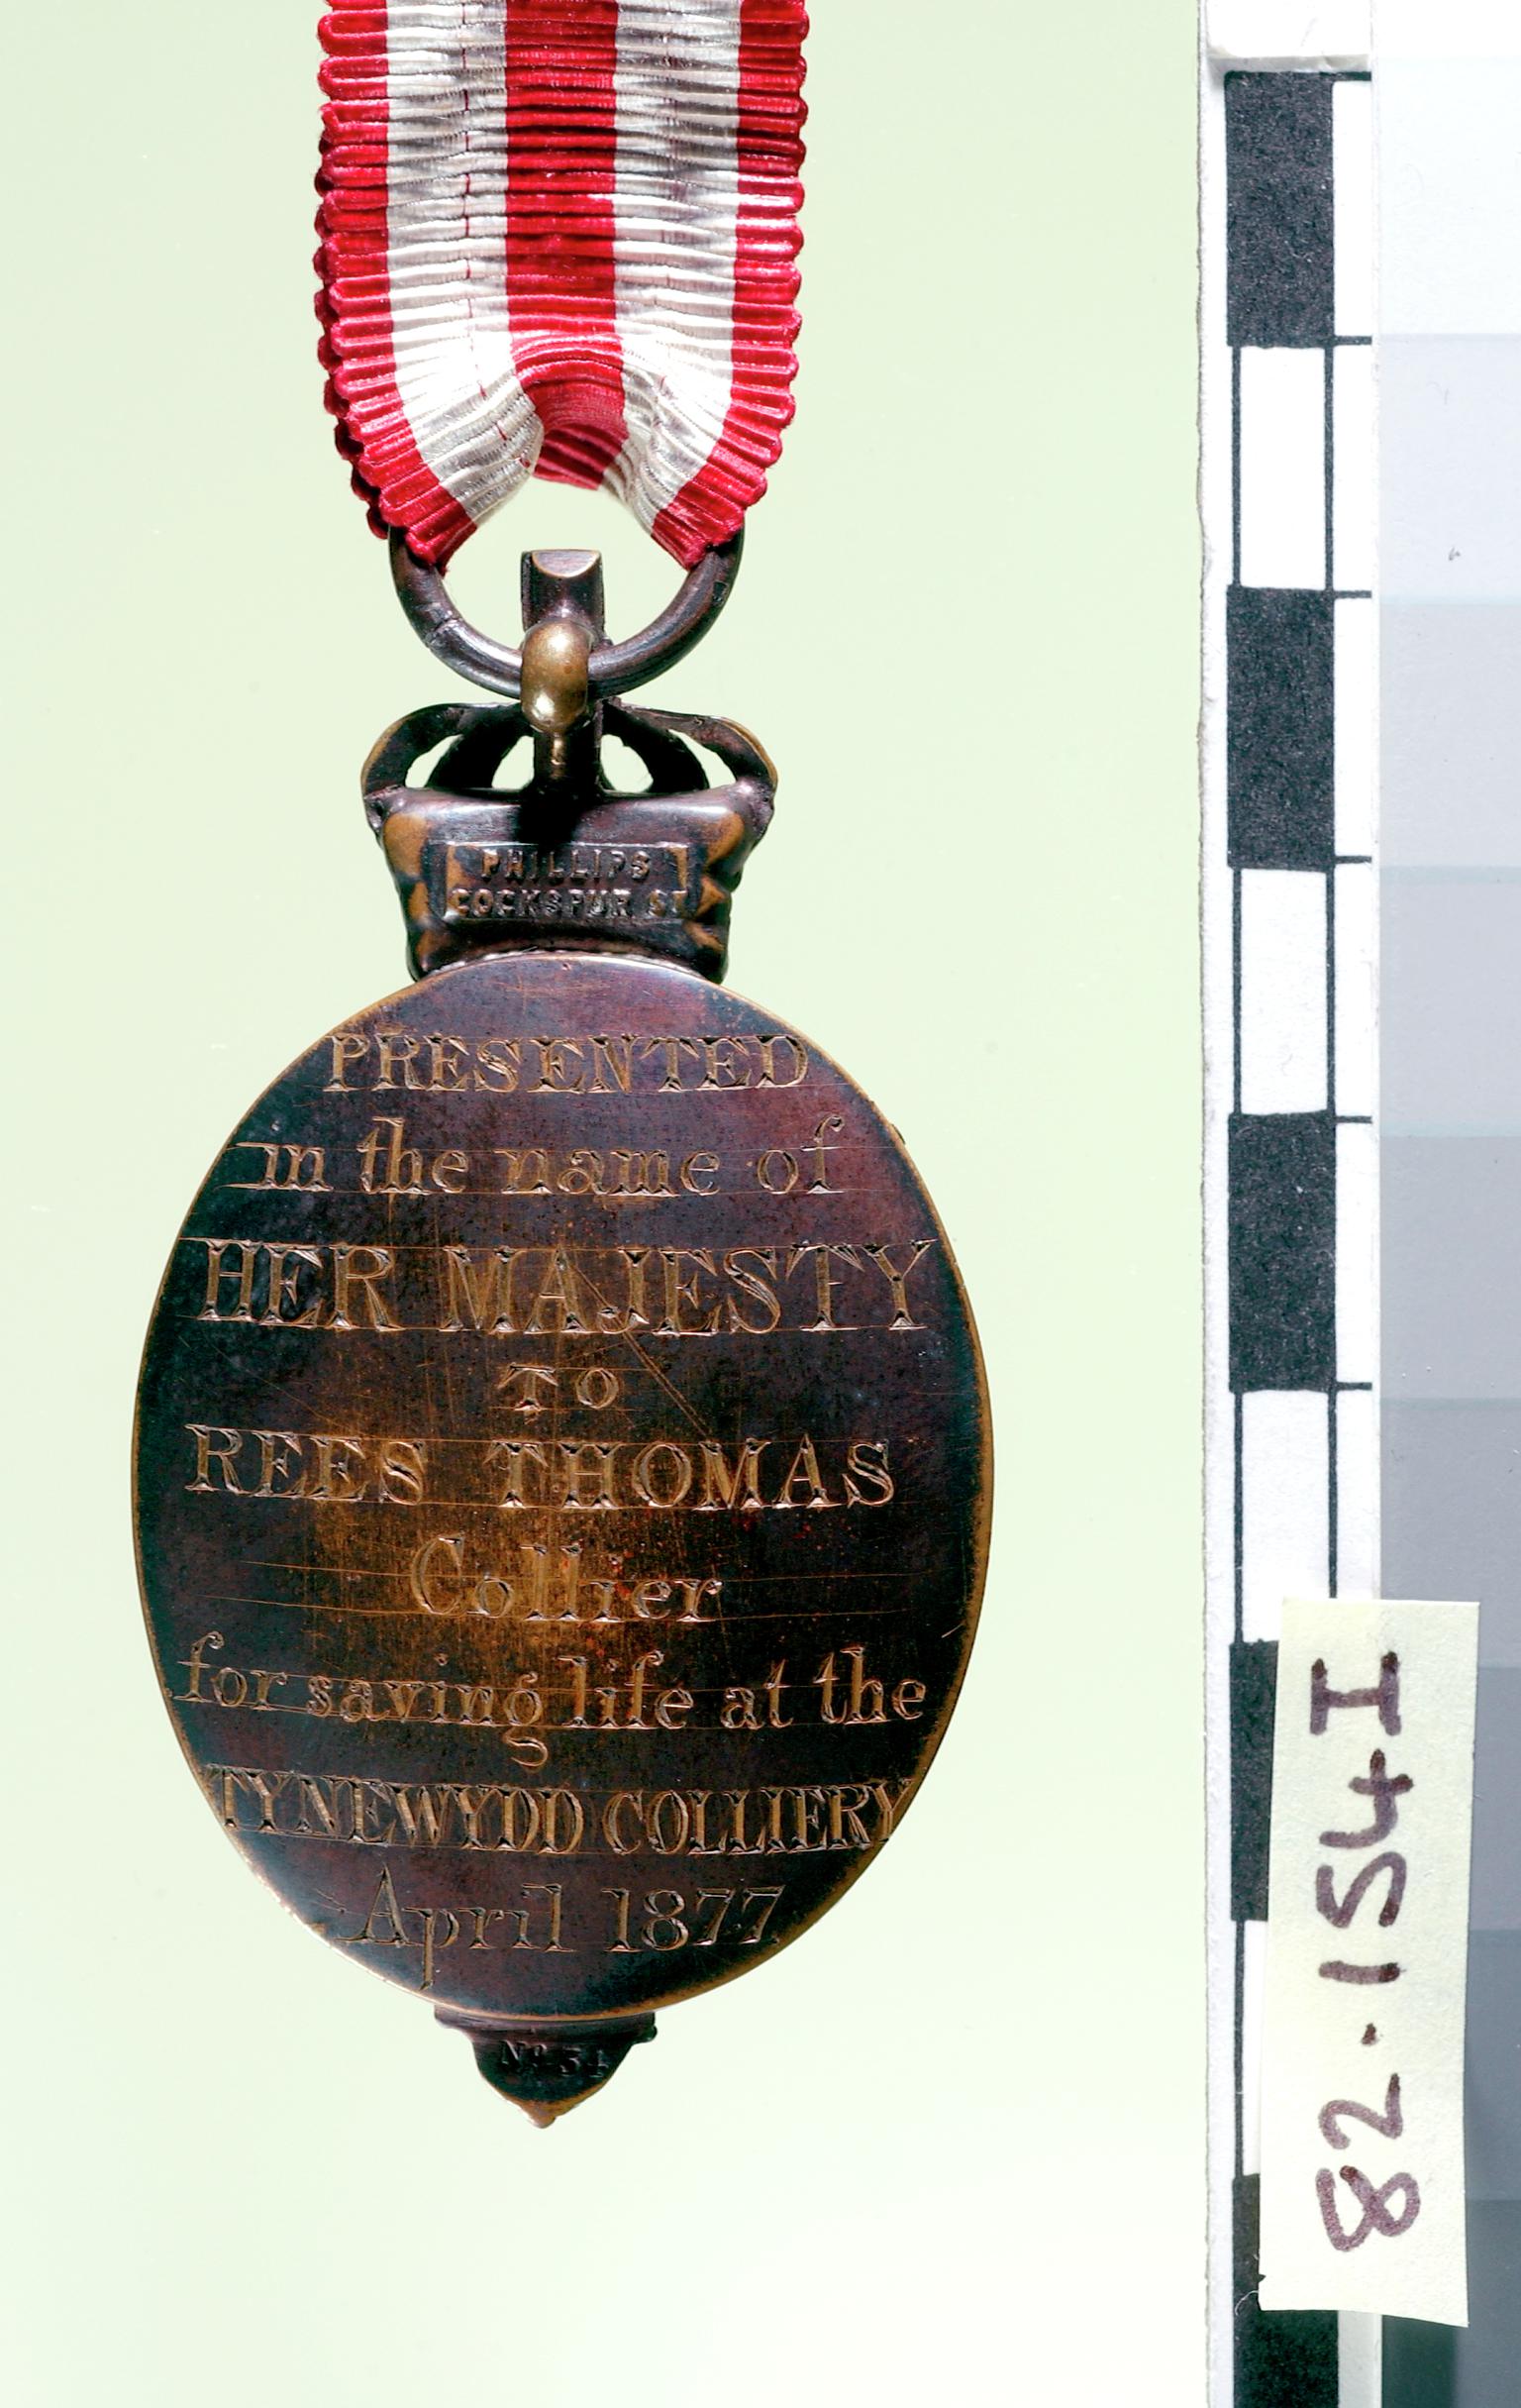 Albert Medal, bronze, presented to Rees Thomas